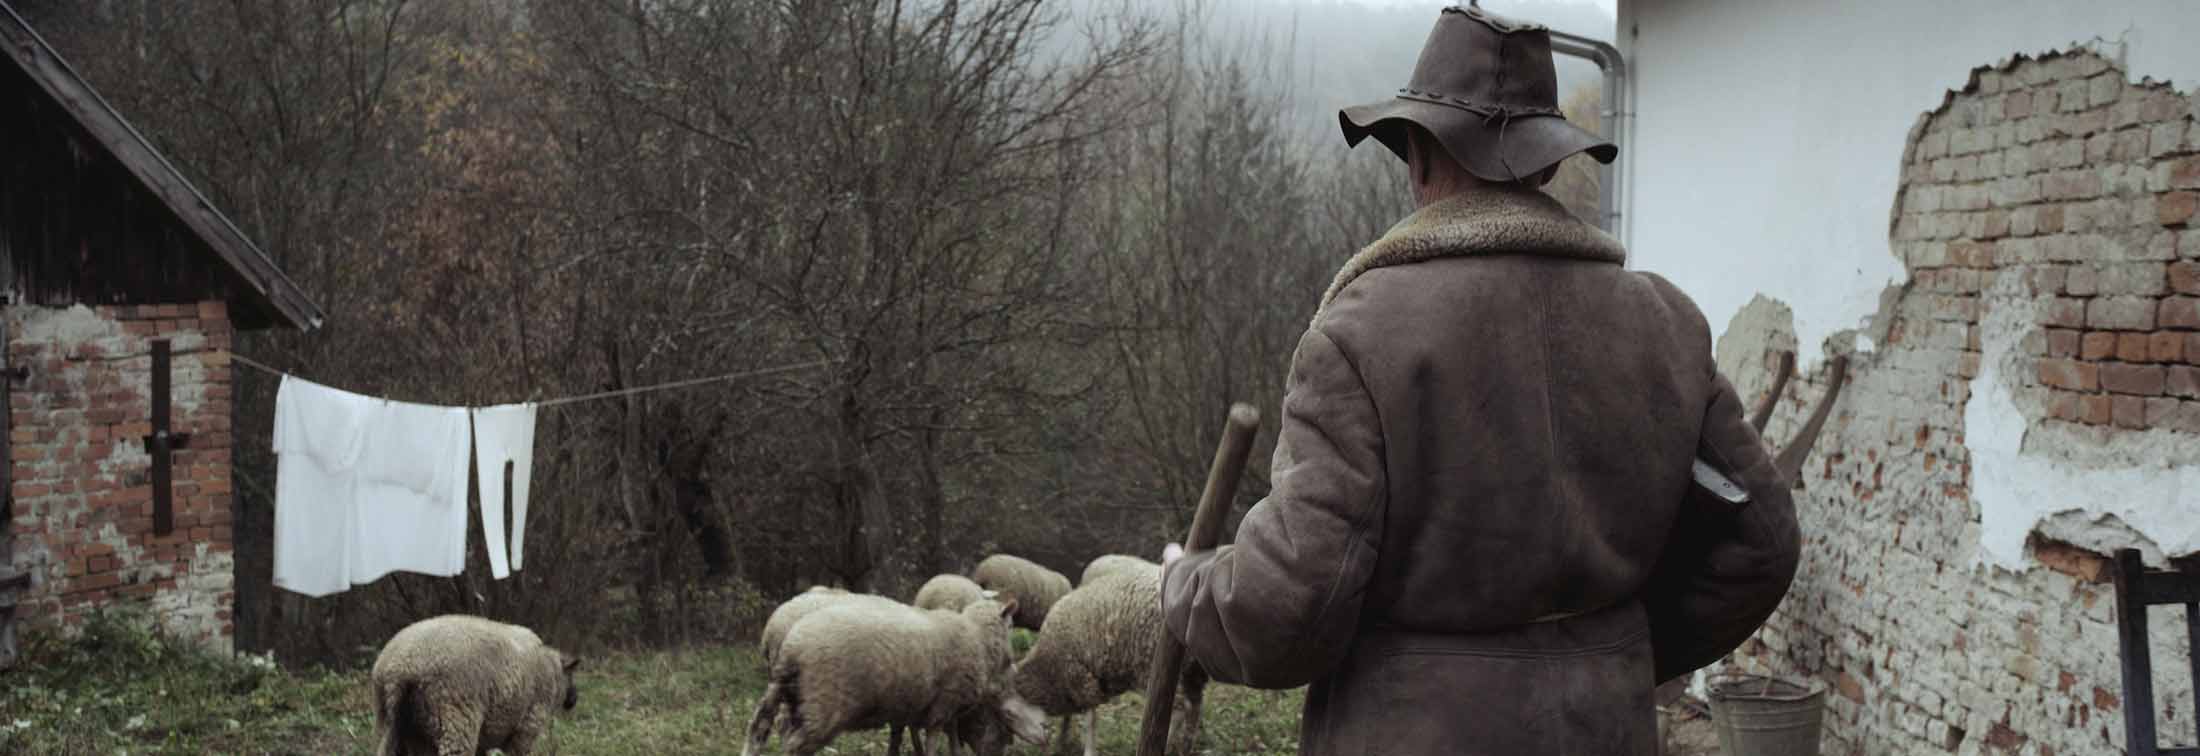 The Shepherd - A true story through an unflinching lens